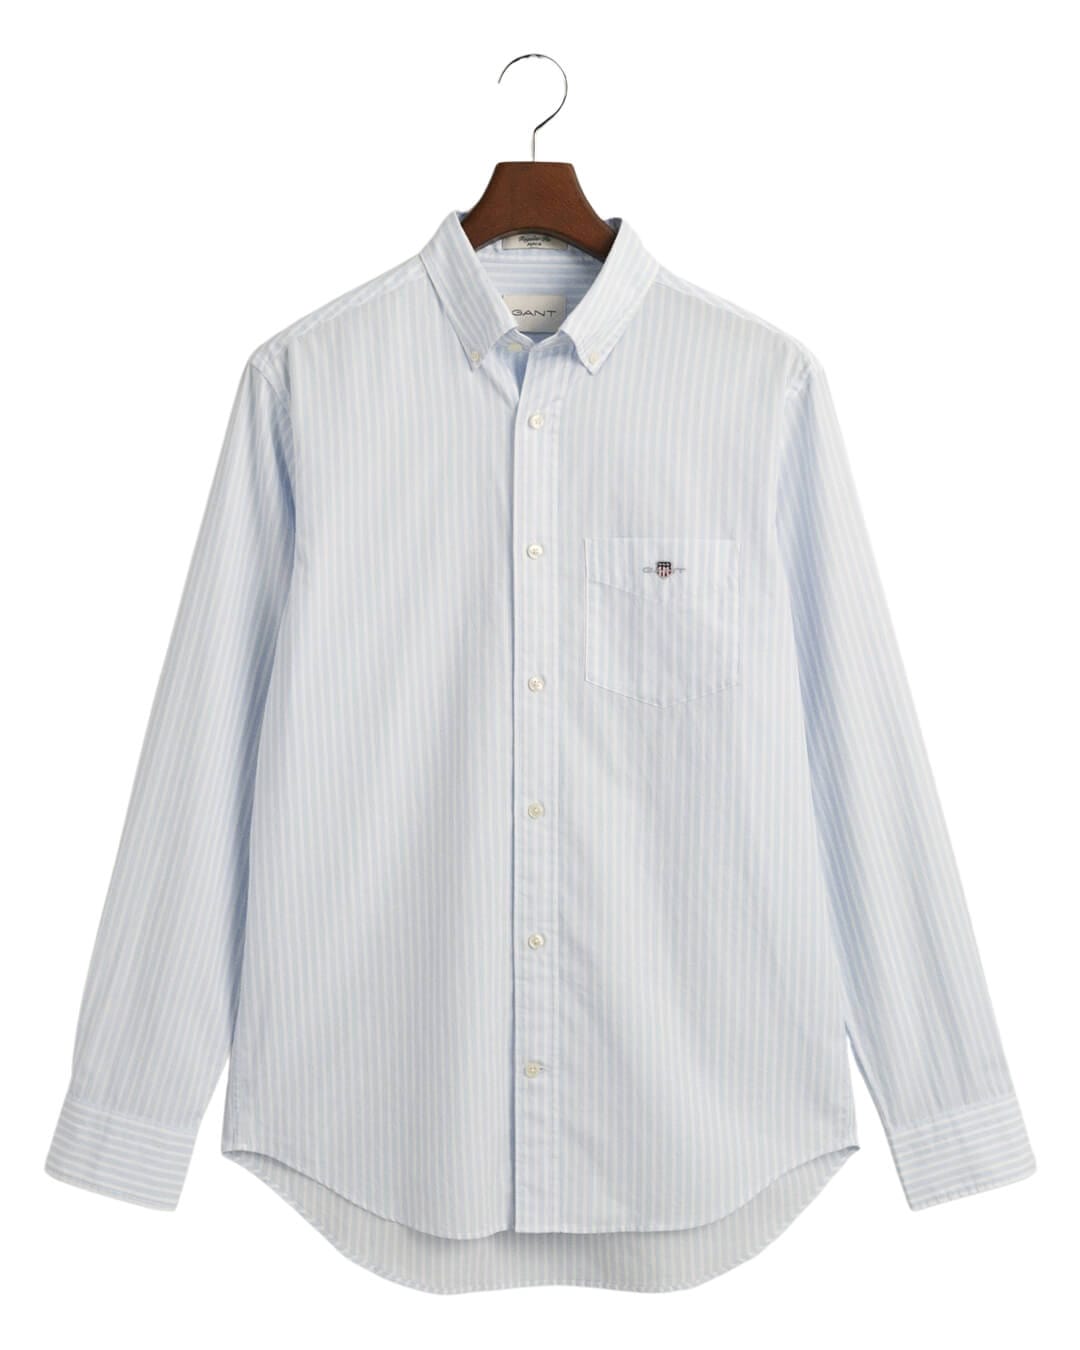 Gant Shirts Gant Light Blue Regular Fit Classic Striped Poplin Shirt